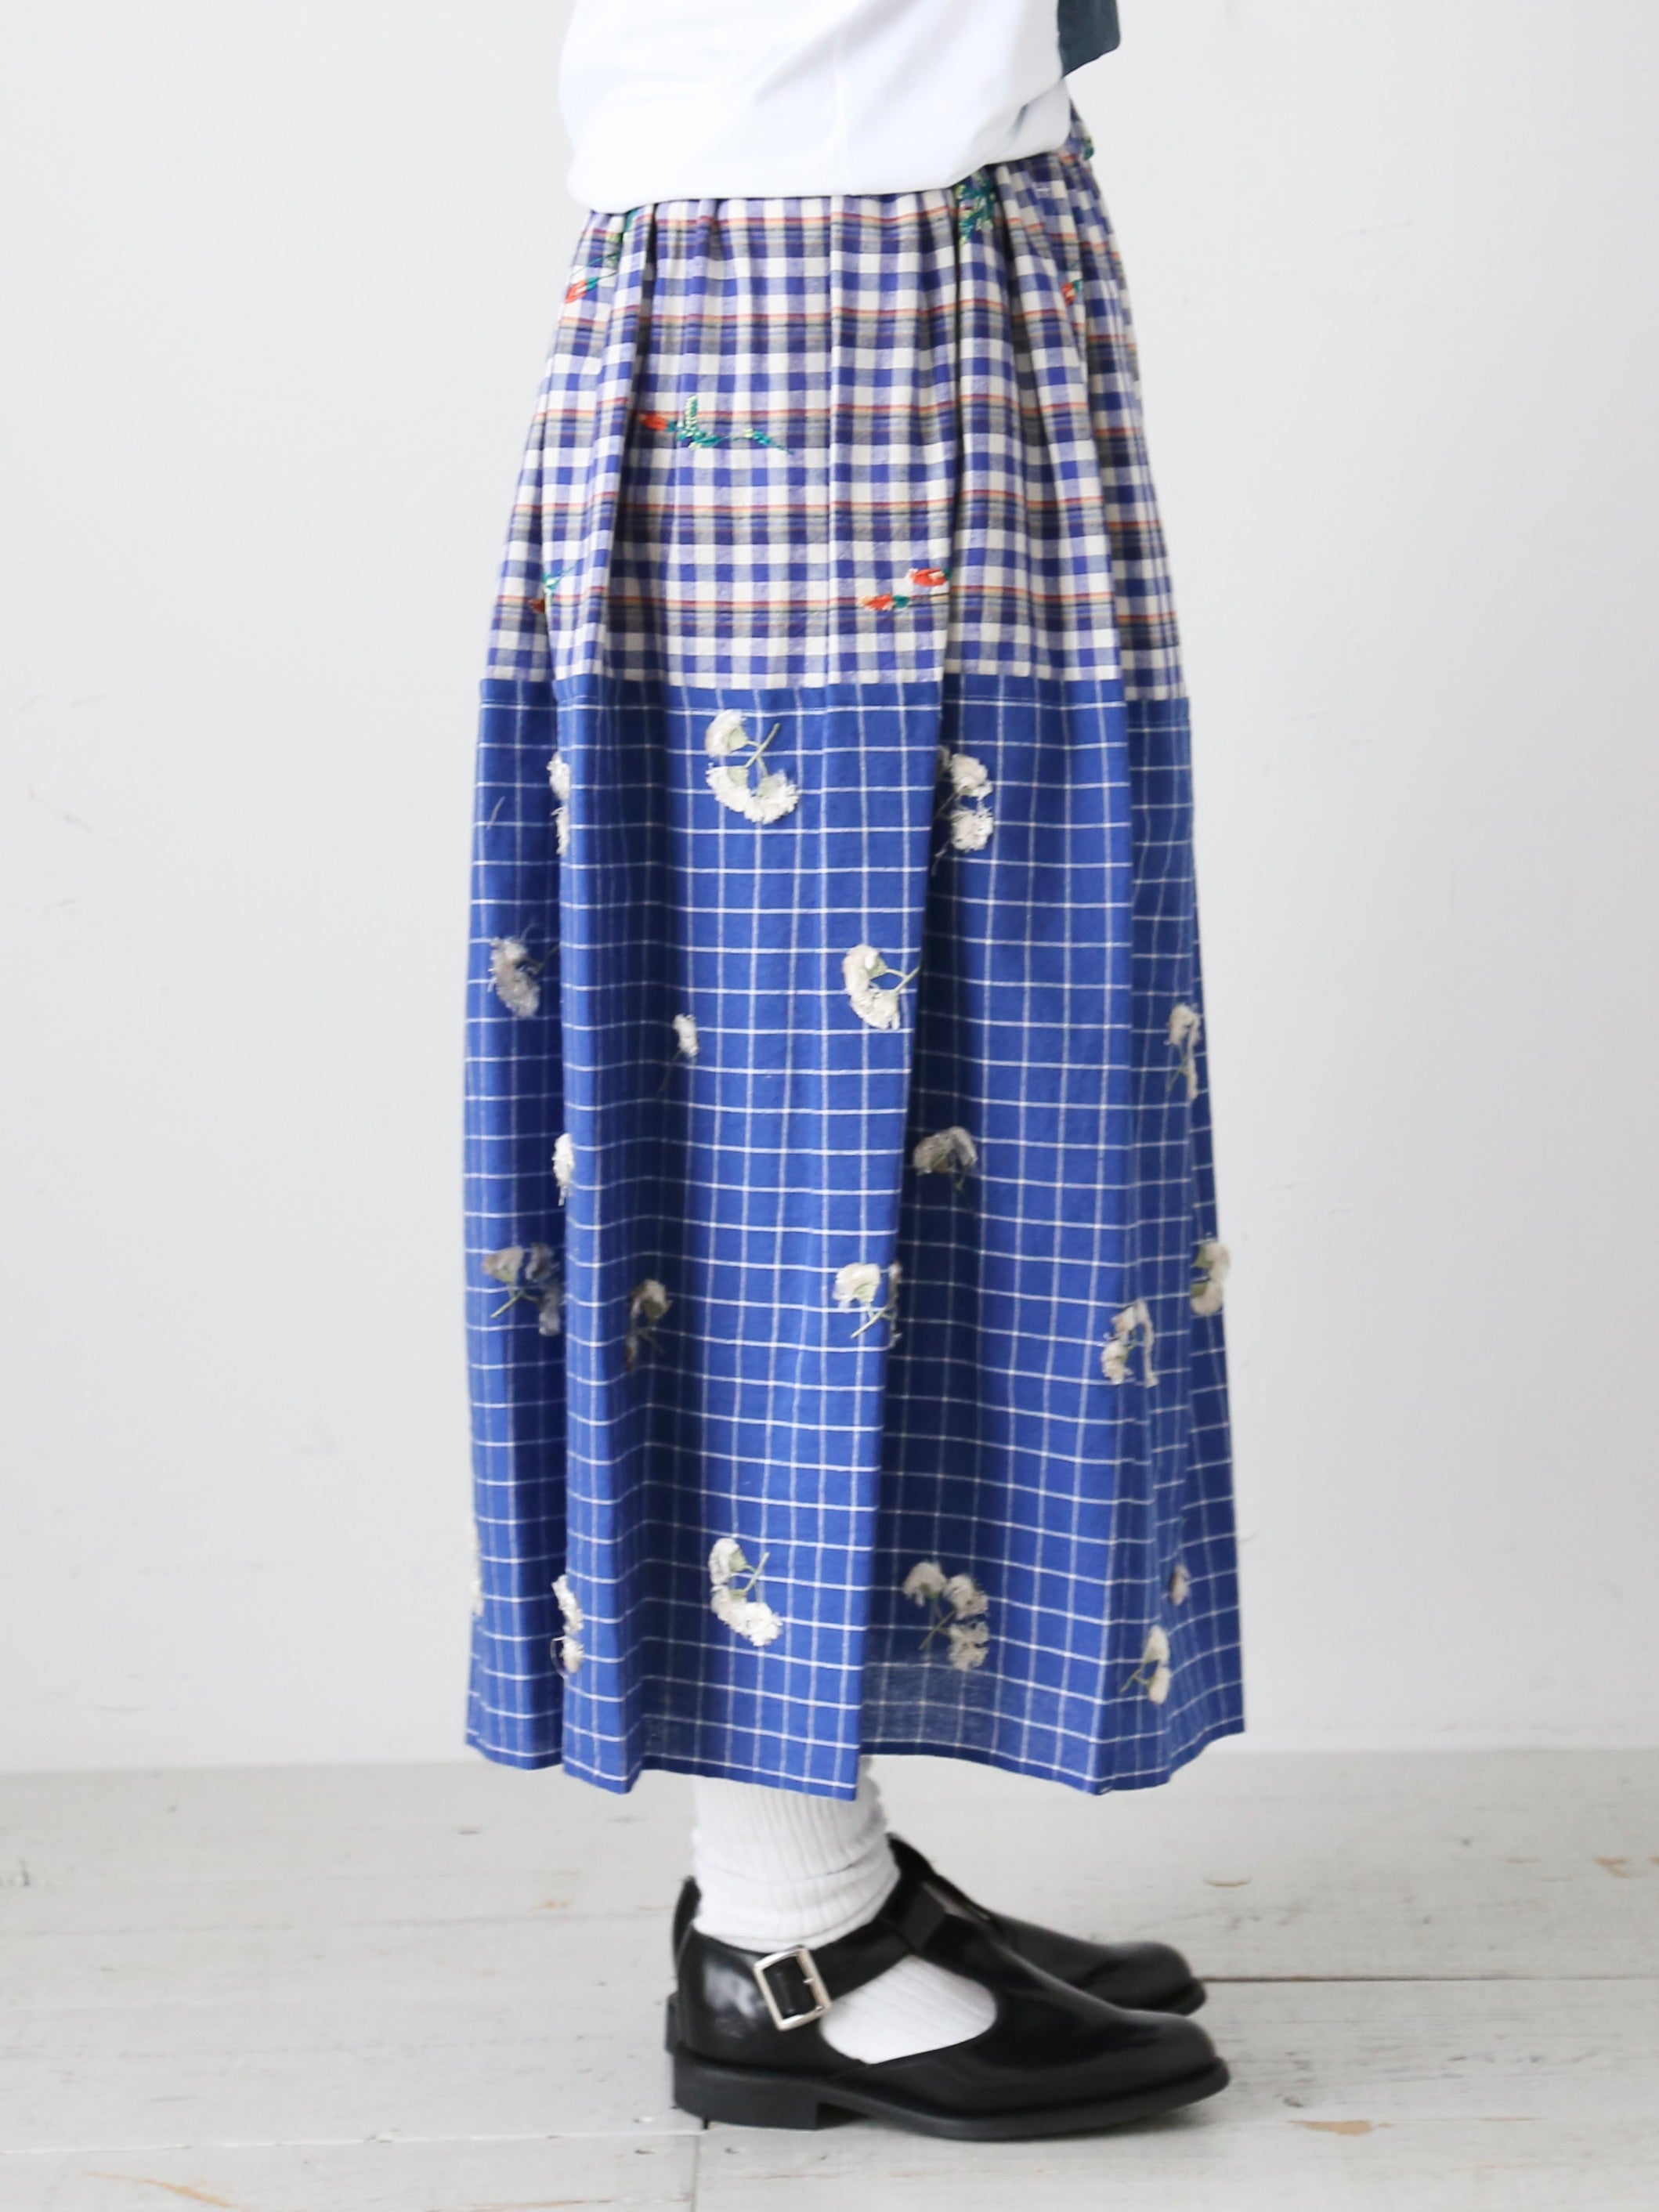 tao 綿クロスチェック刺繍スカート [TM-S023-051]